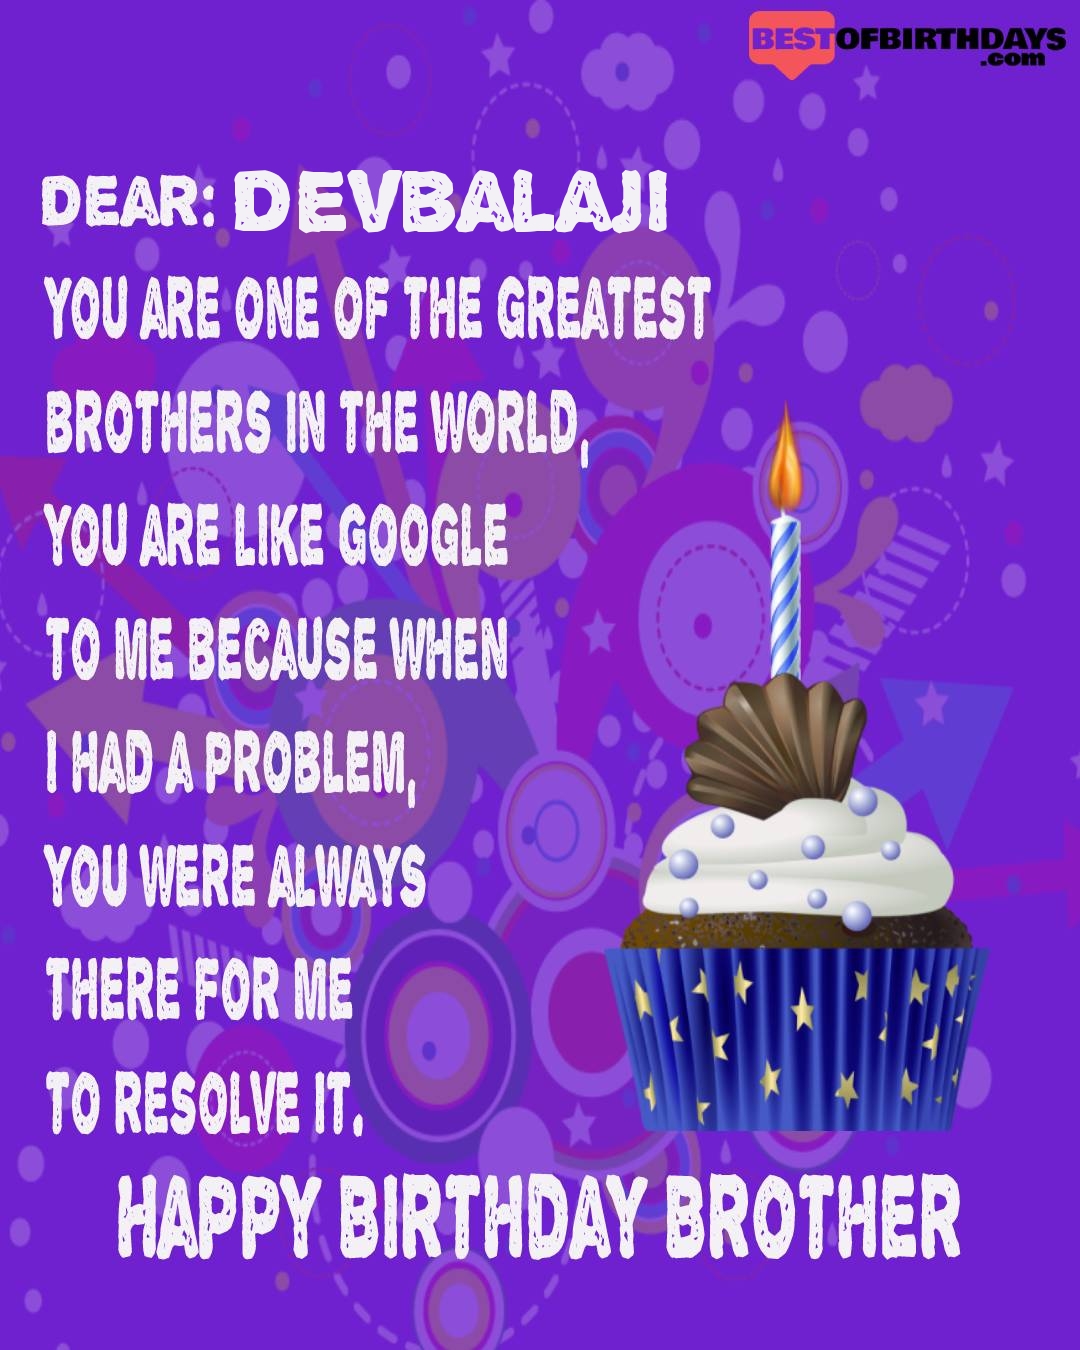 Happy birthday devbalaji bhai brother bro